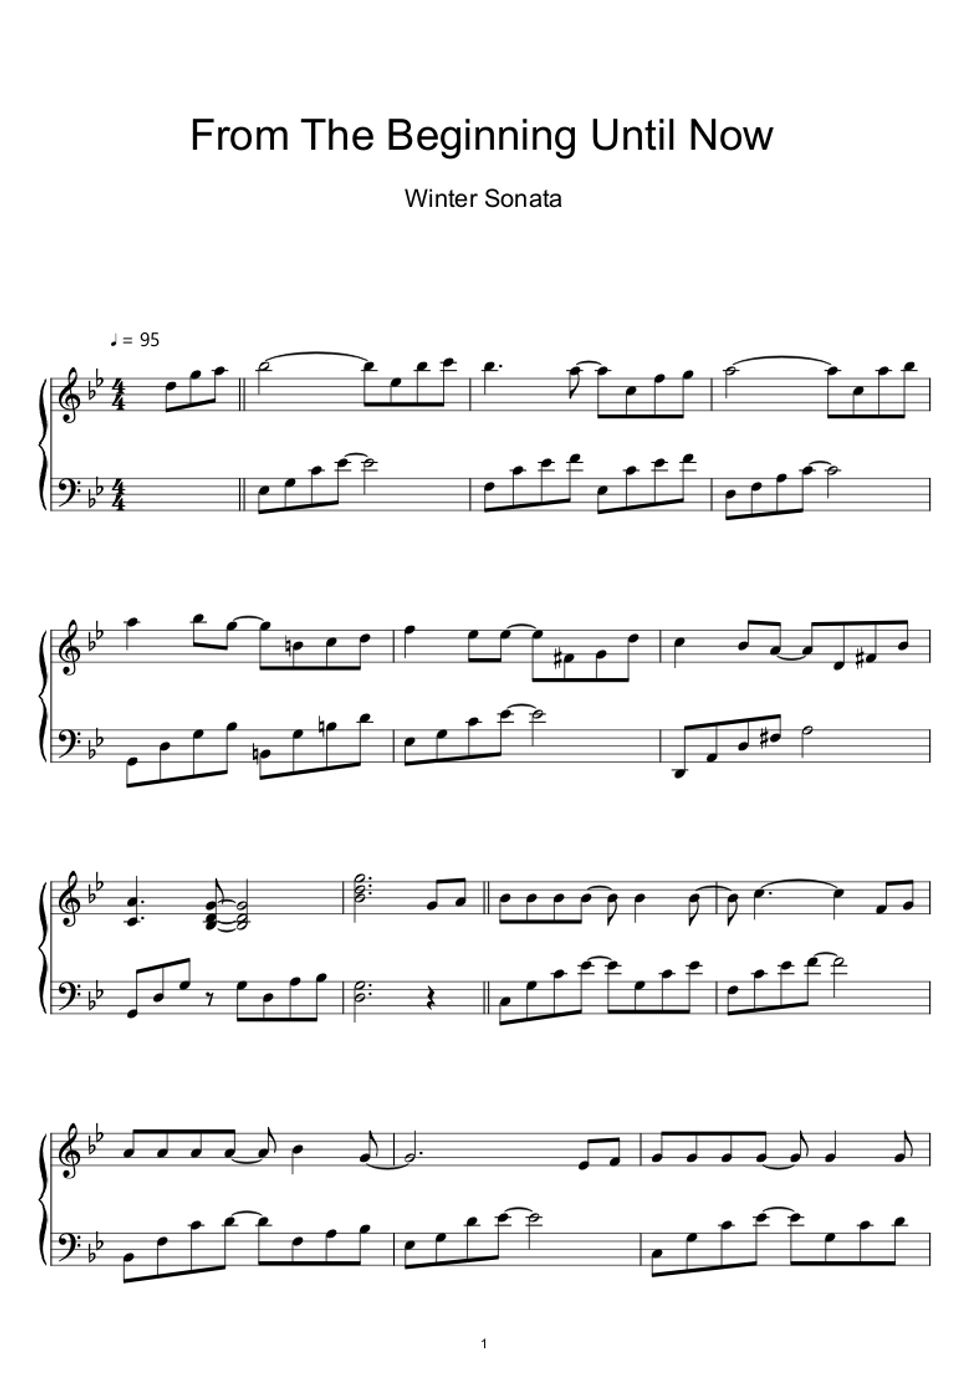 RYU - From Beginning Until Now (Winter Sonata OST) (Sheet Music, MIDI,) by sayu